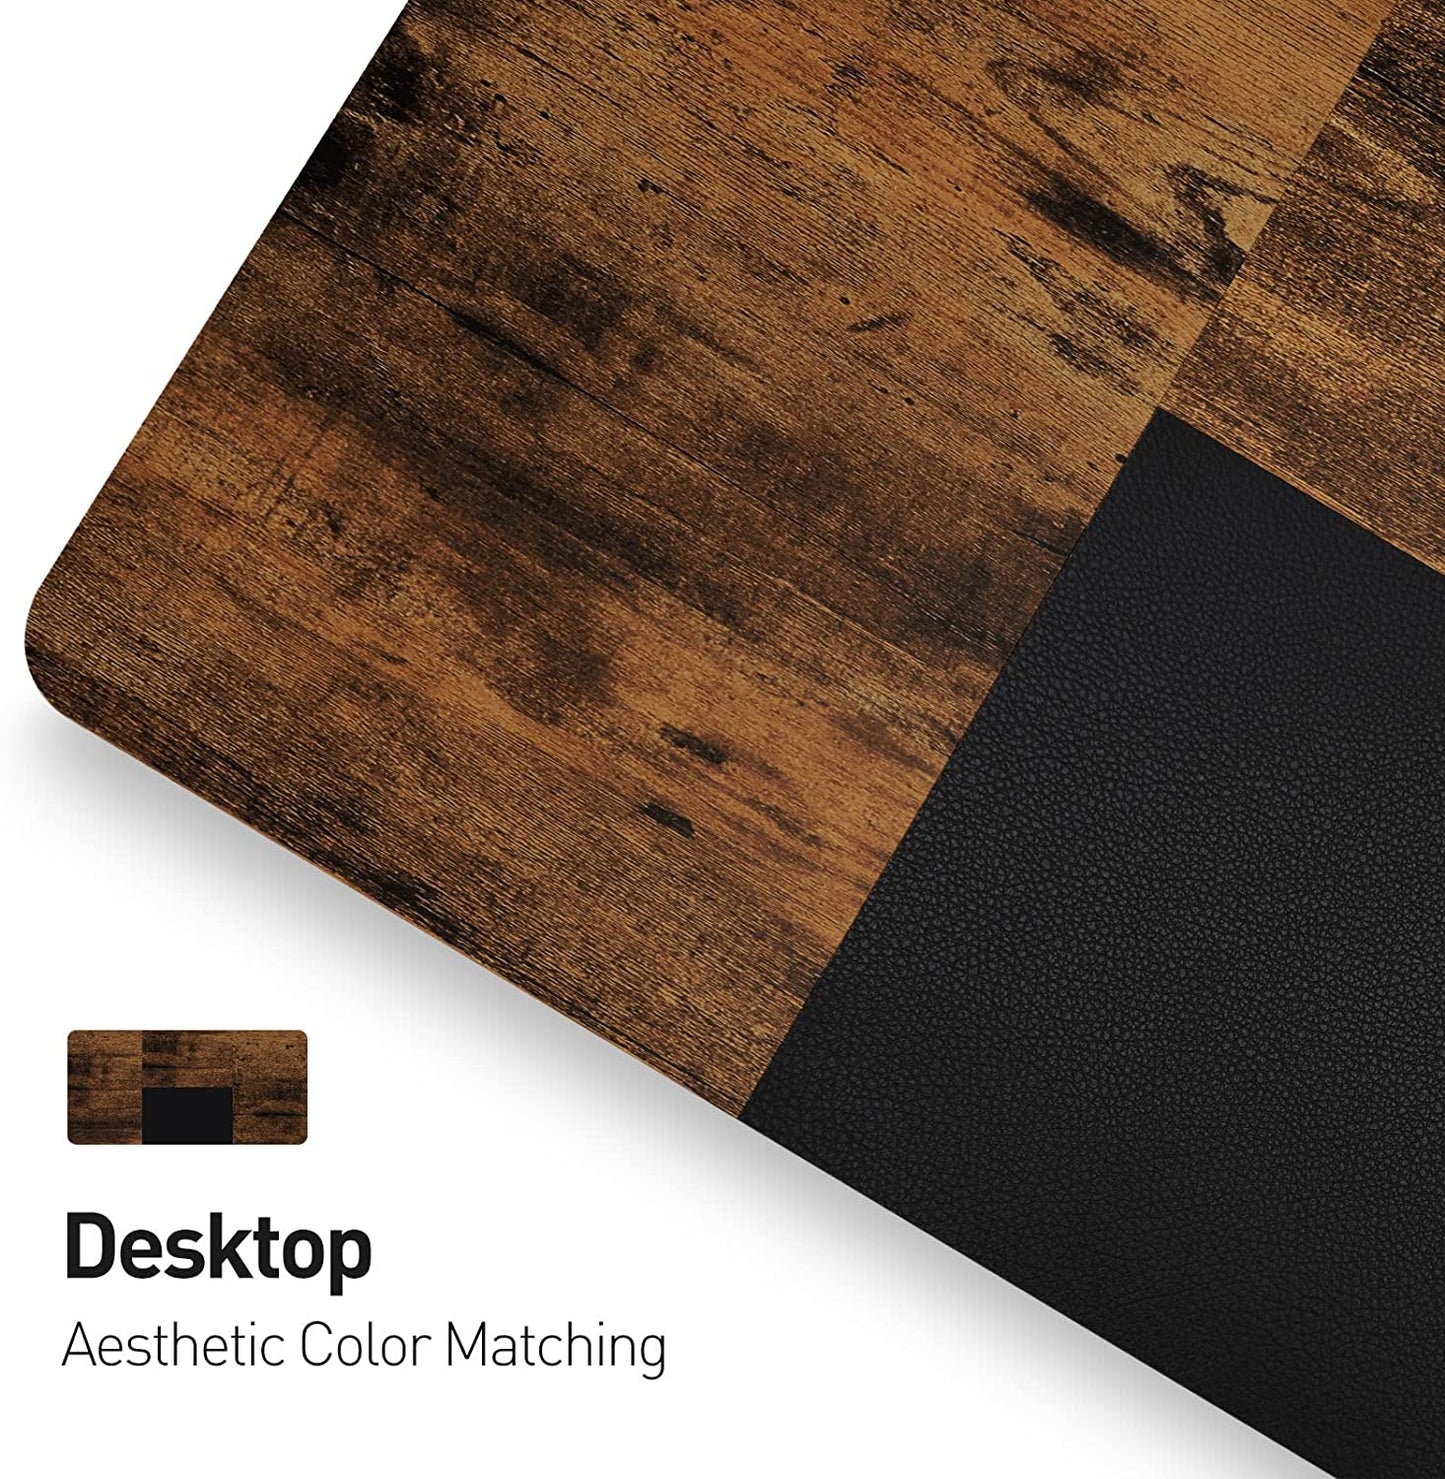 Rustic Brown + Black stand up desk with rustic brown desktop